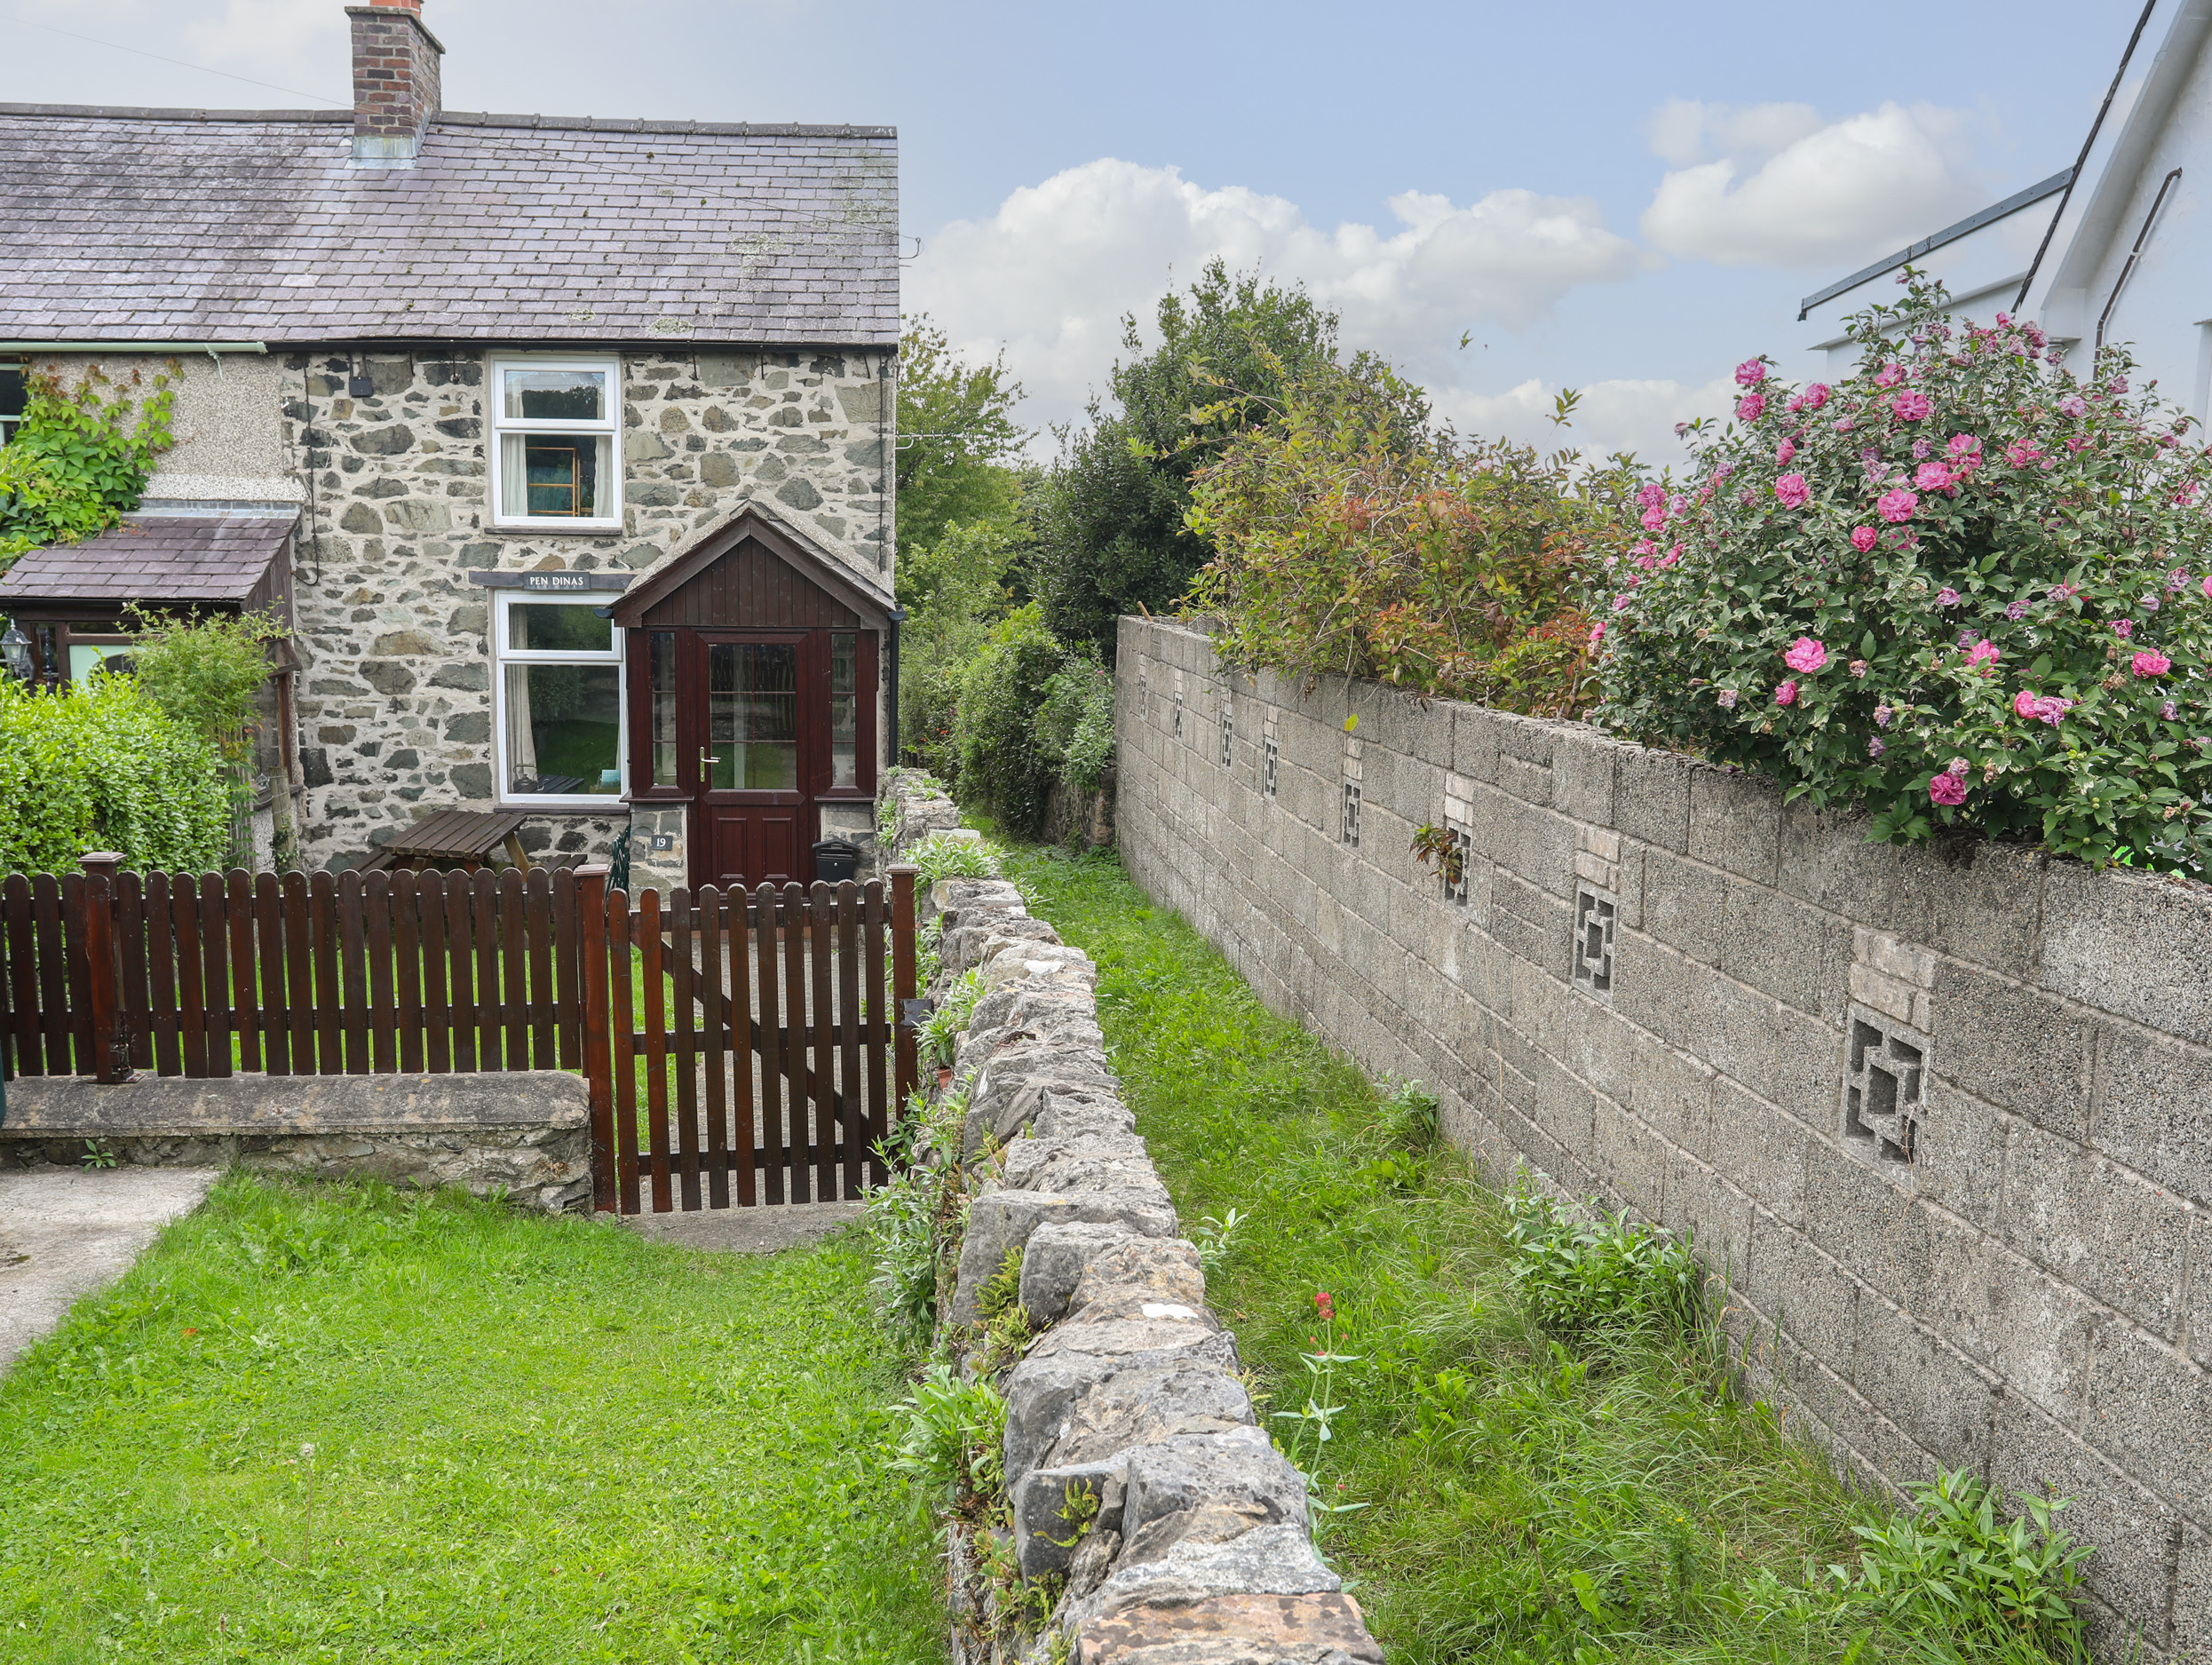 3 bedroom Cottage for rent in Bangor - Wales